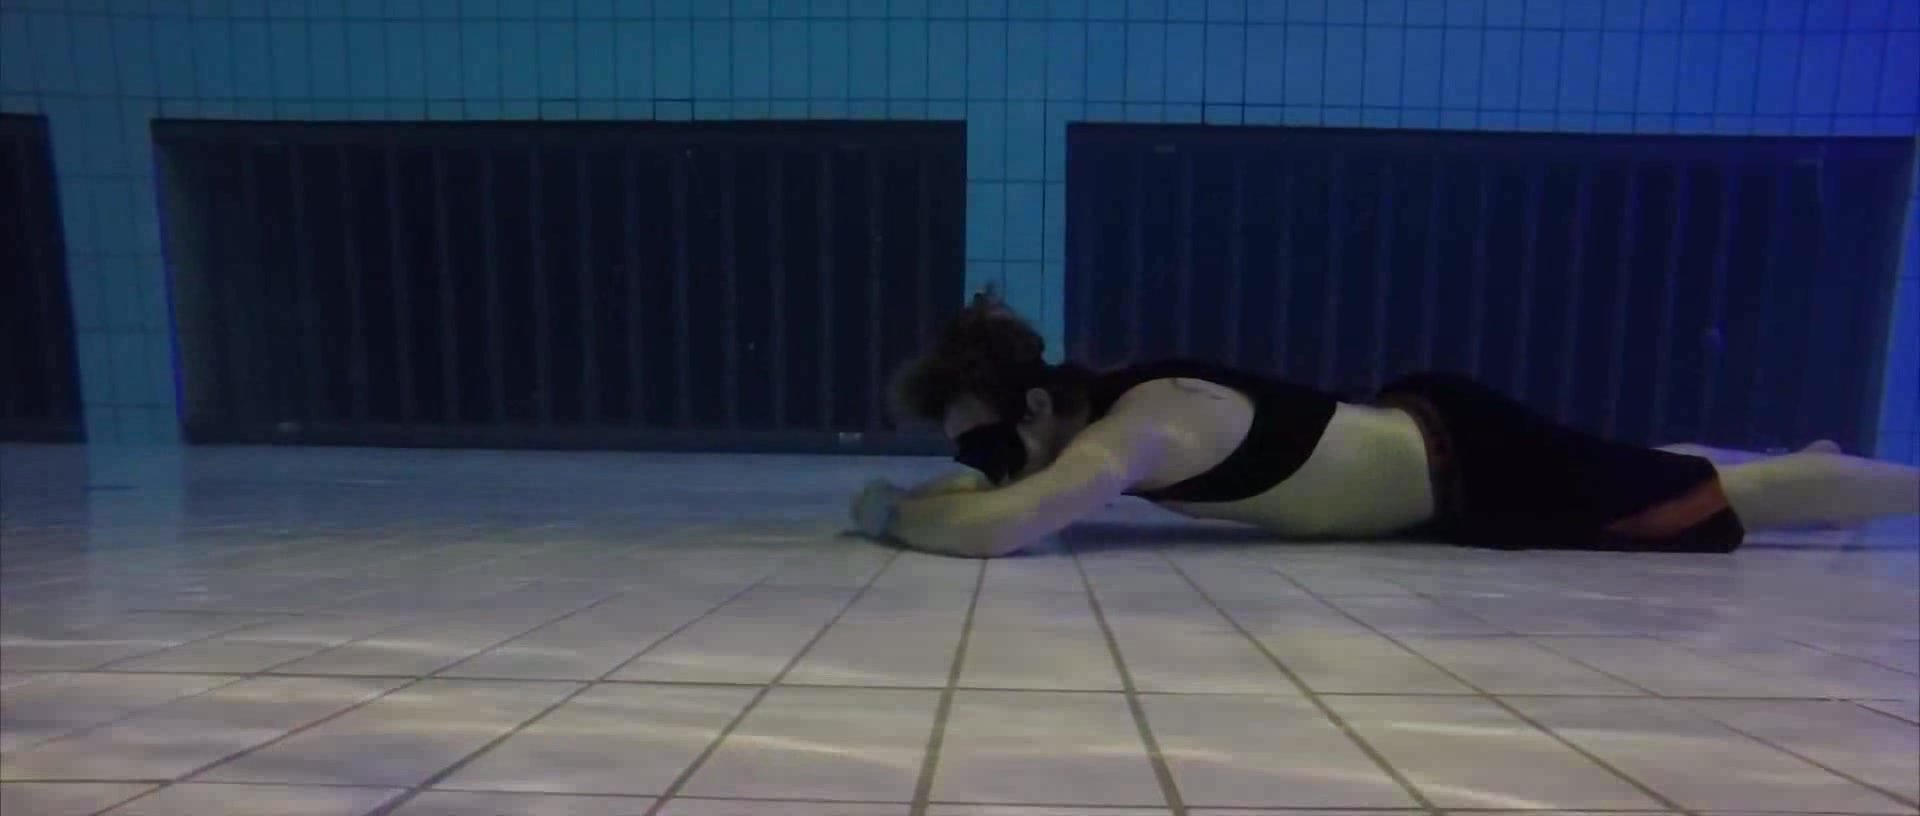 Six minutes static breathold underwater